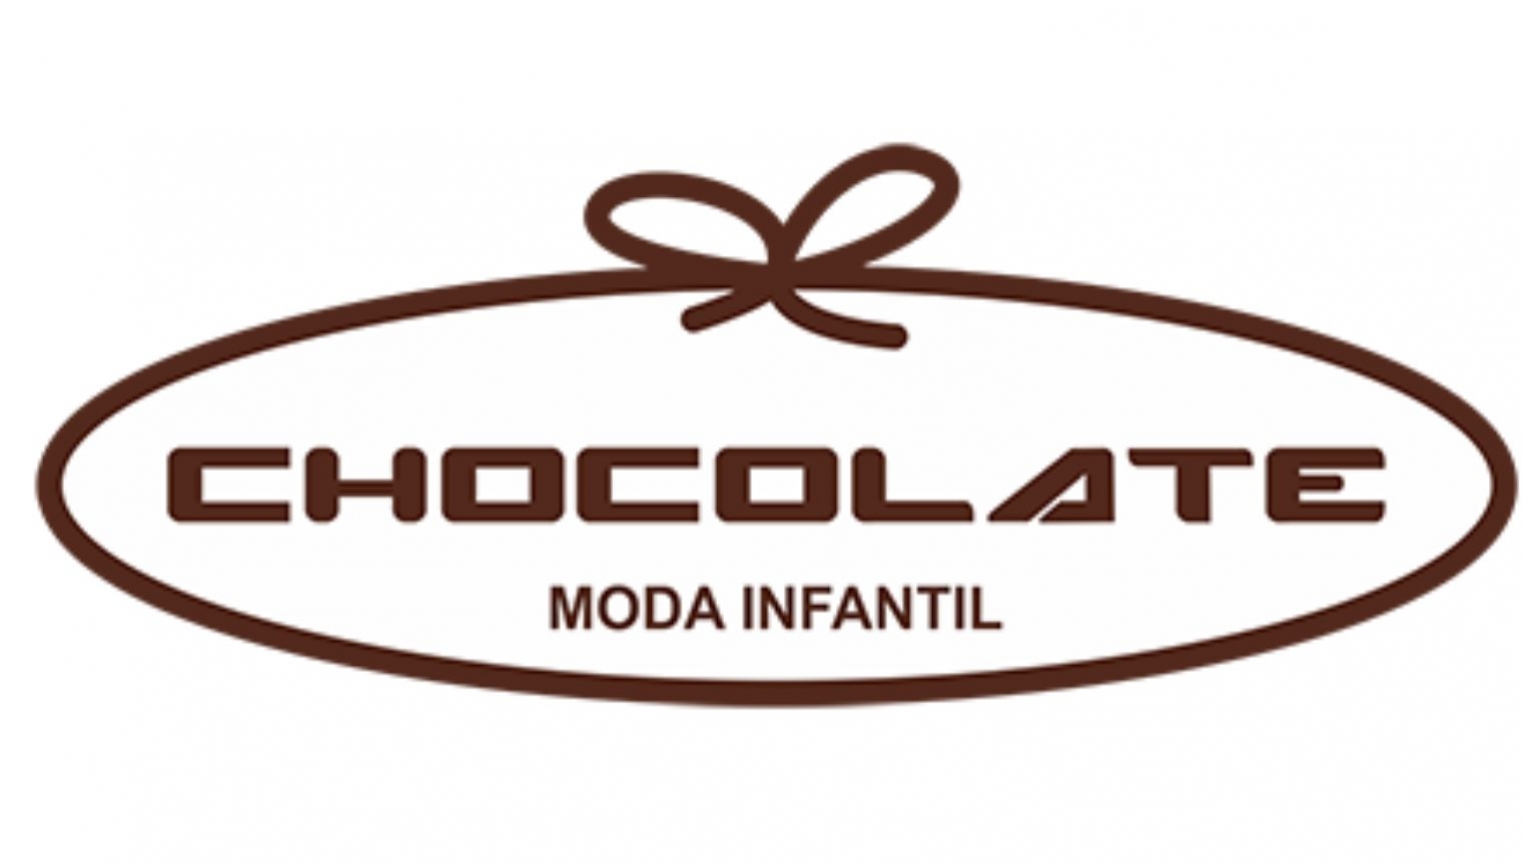 Chocolate Moda Infantil - foto 1/1